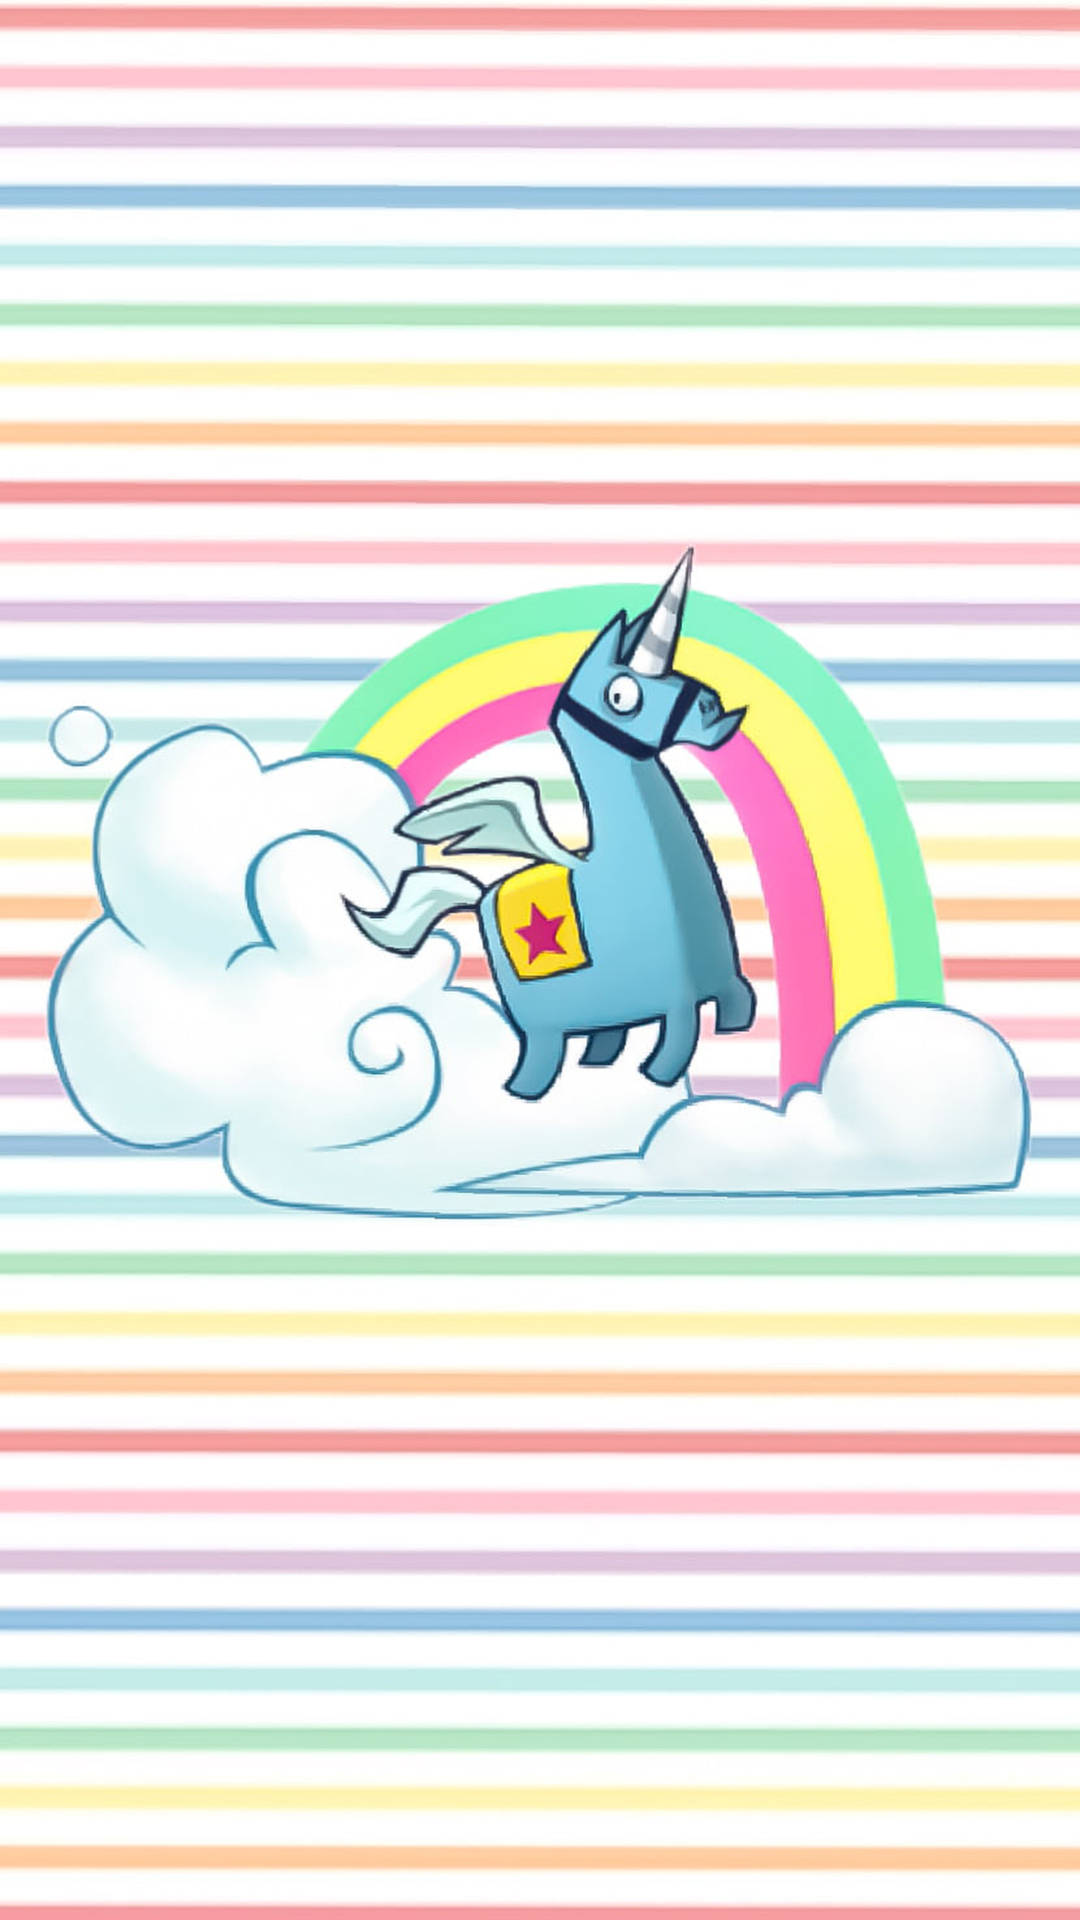 Fortnite Unicorn In Cute Pastel Colors Background